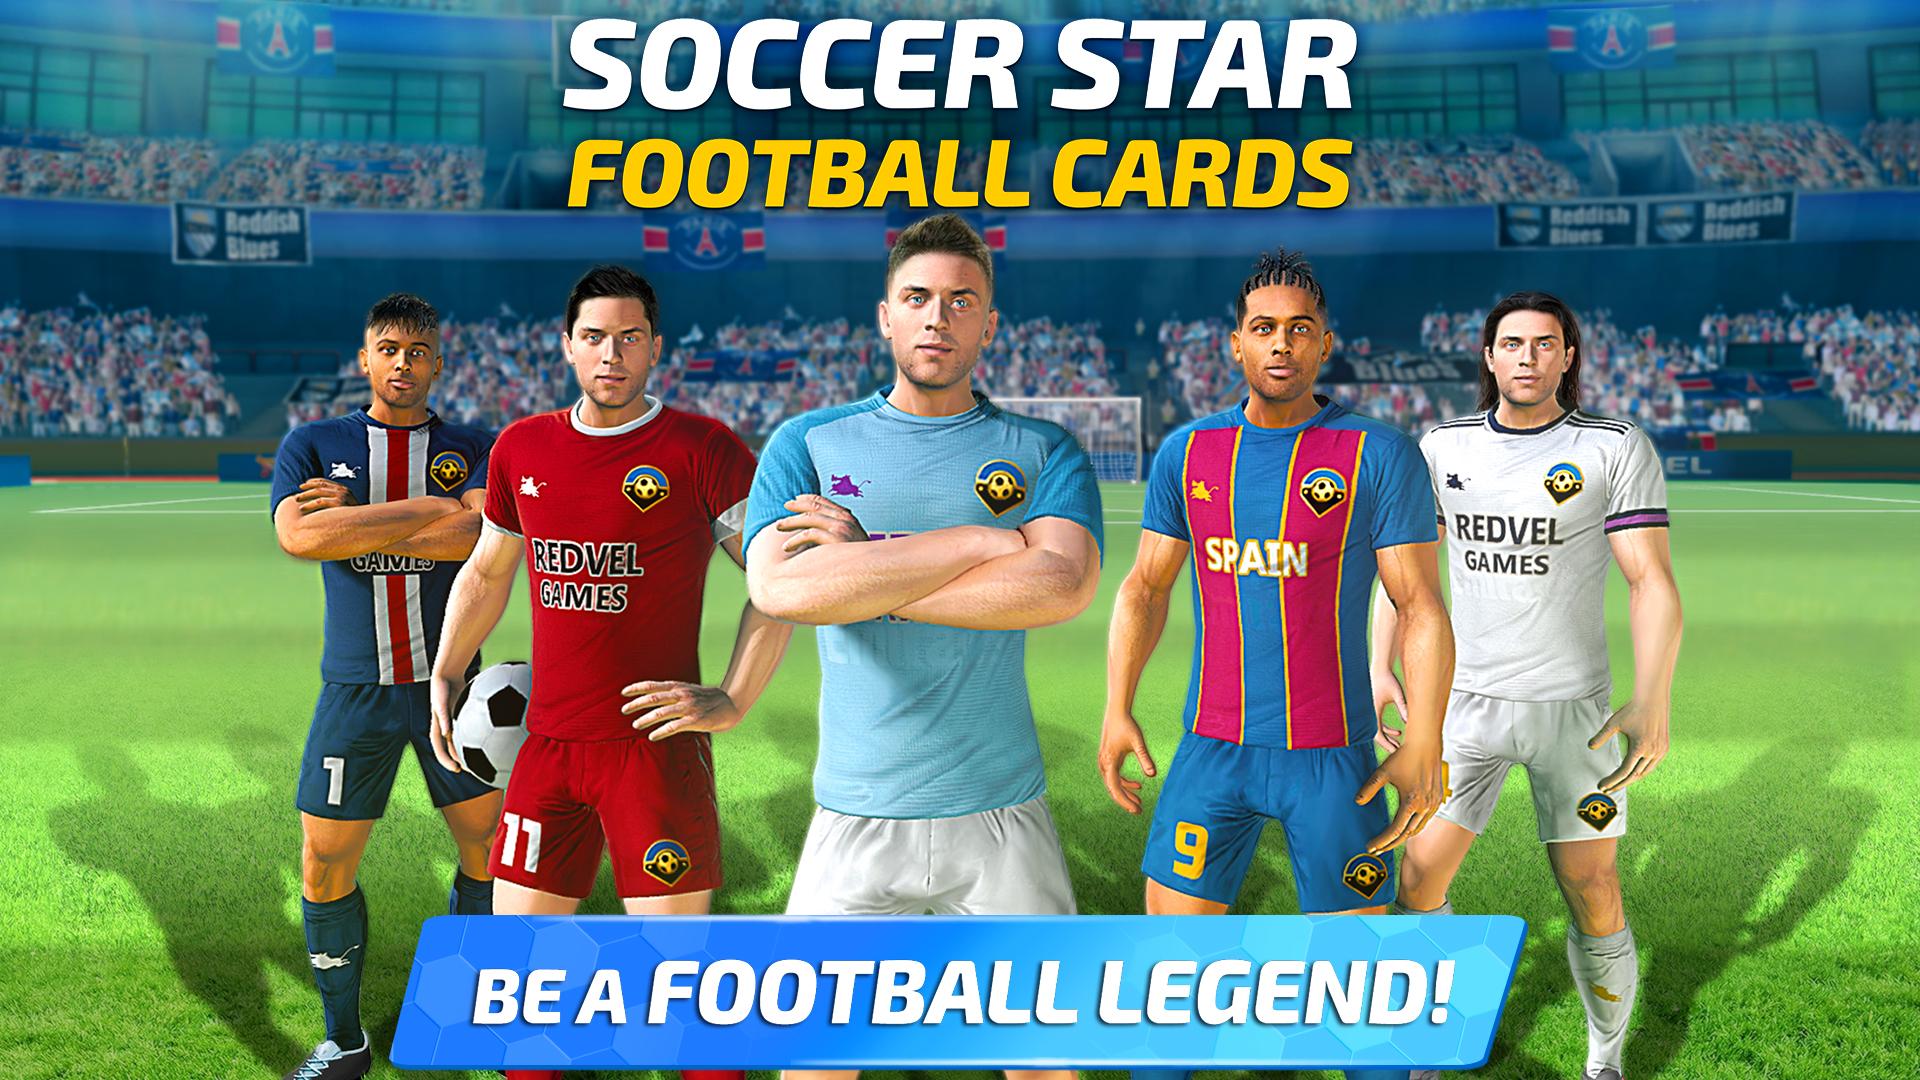 Soccer Star 2020 Football Cards: The soccer game 0.19.0 Screenshot 10